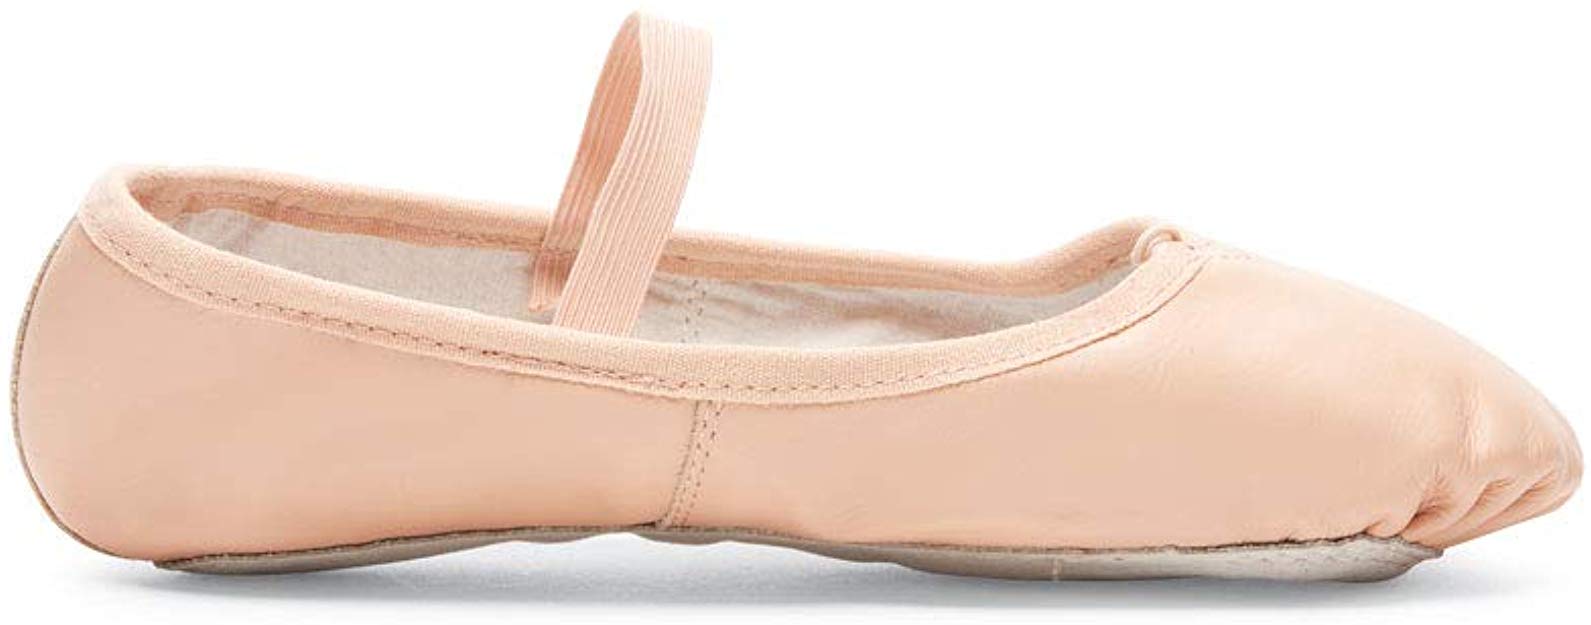 Balera Ballet Shoe Leather Full Sole